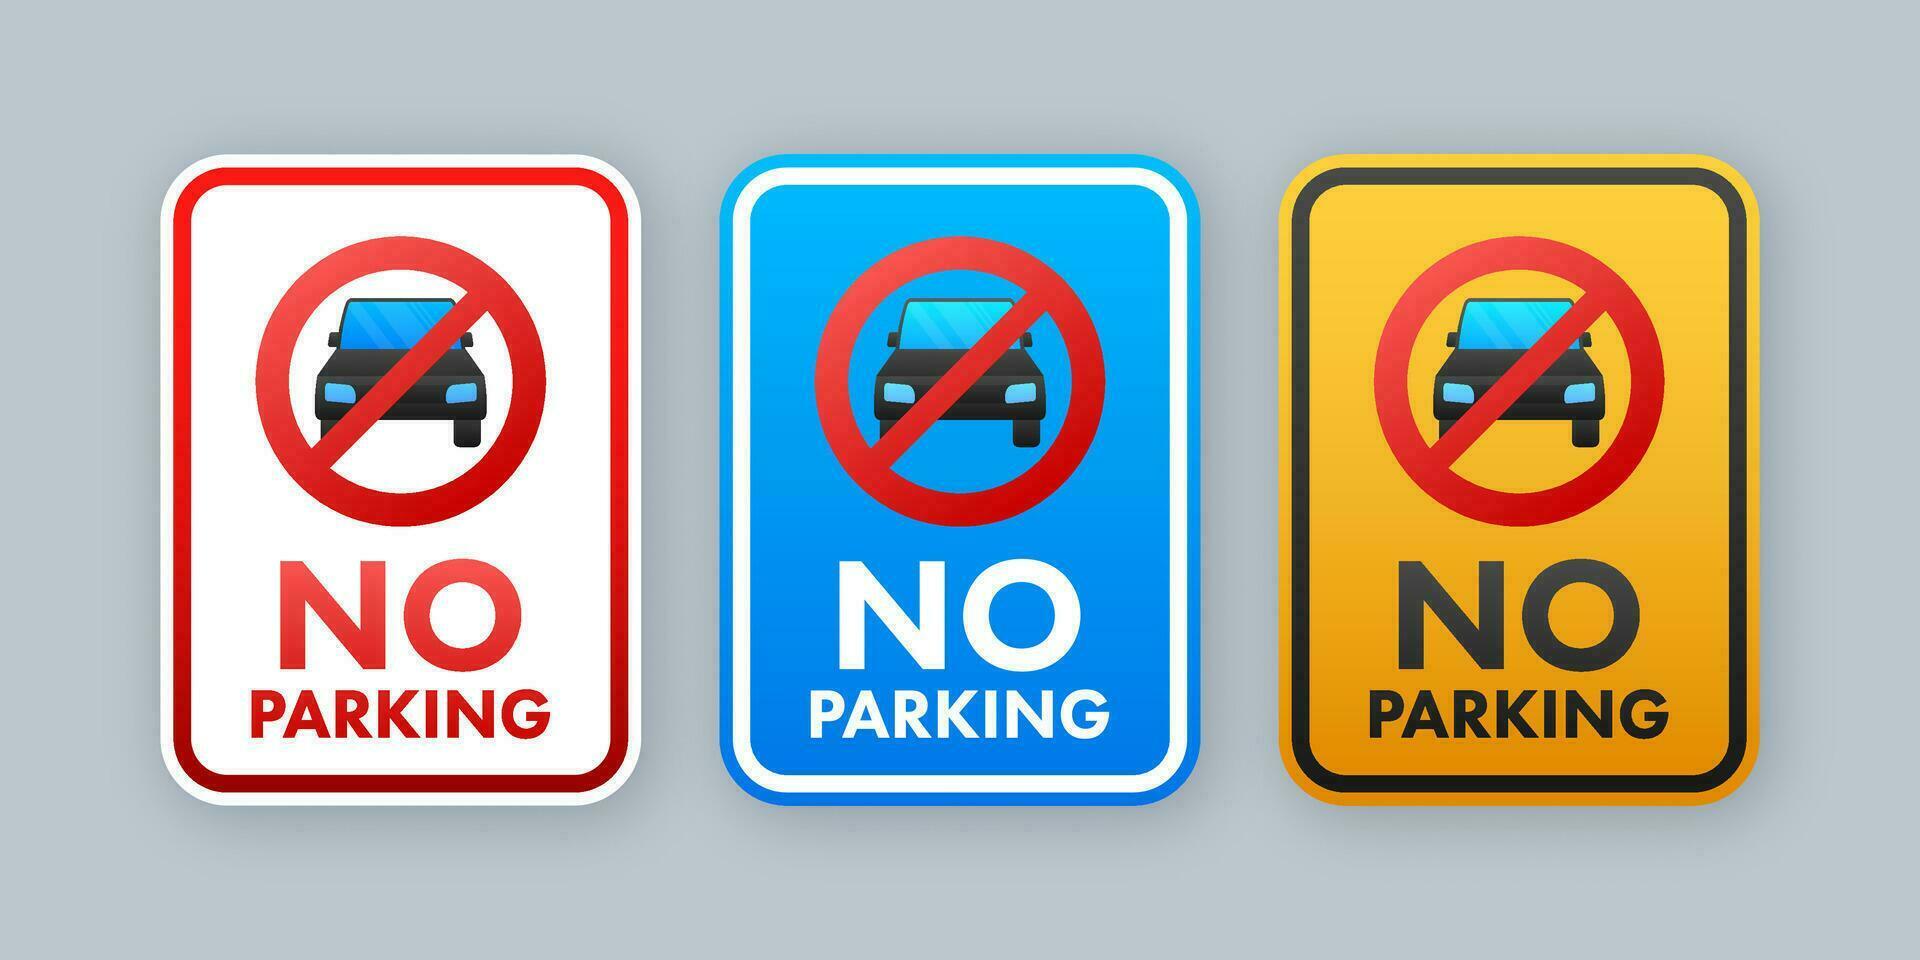 No parking . Danger symbol. Warning attention sign. Stop sign. Vector stock illustration.